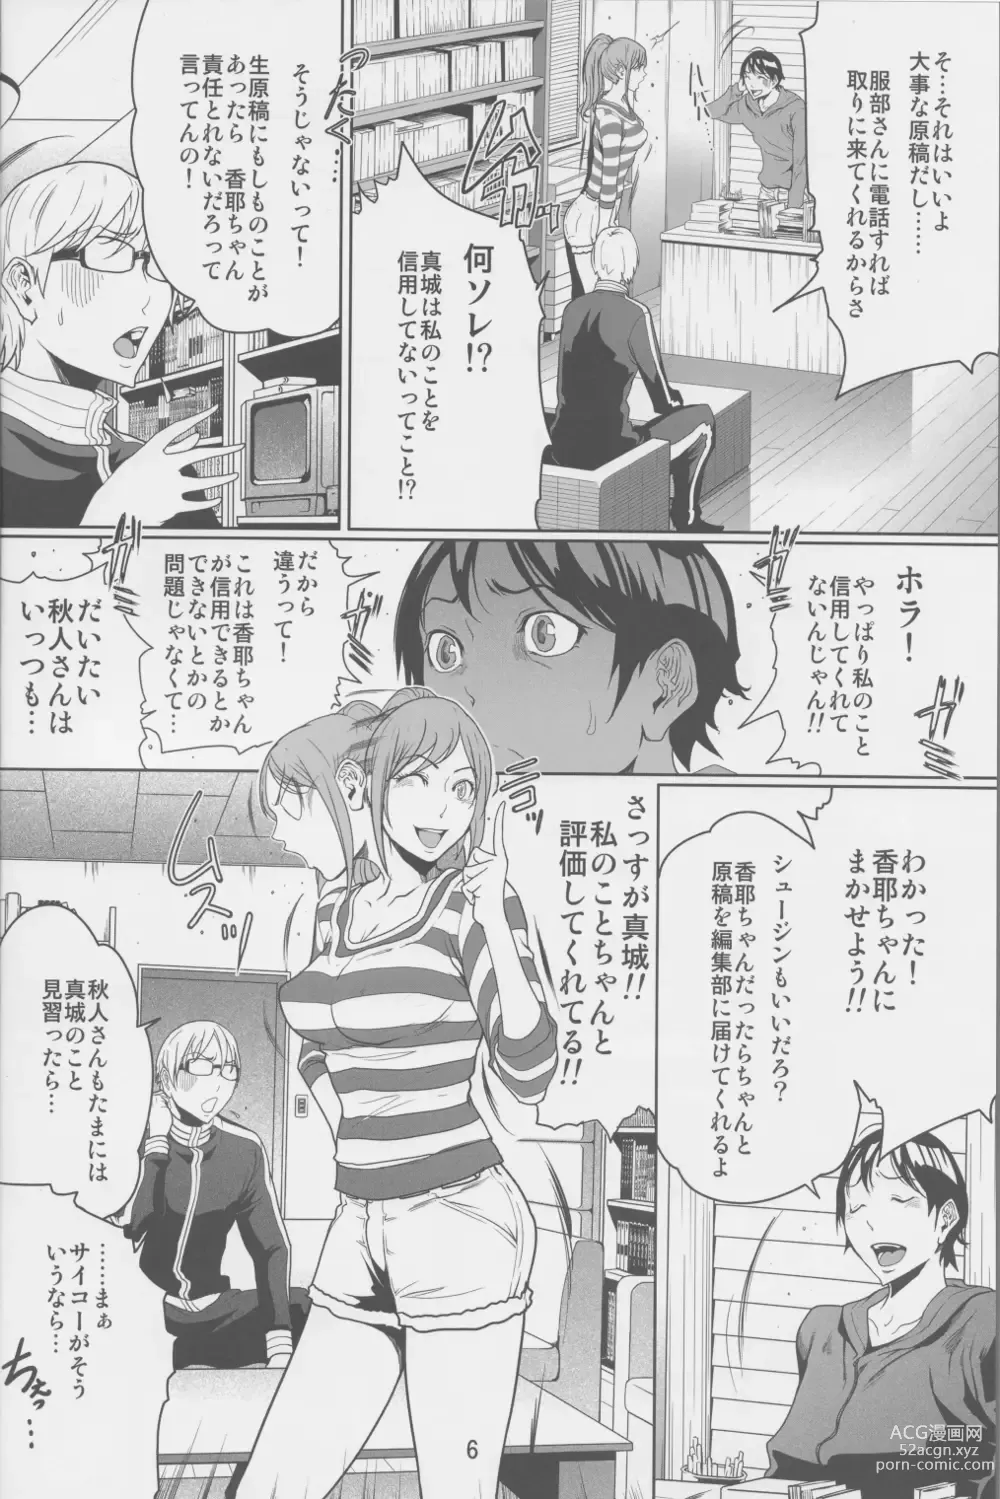 Page 5 of doujinshi BAKULOVE. 06